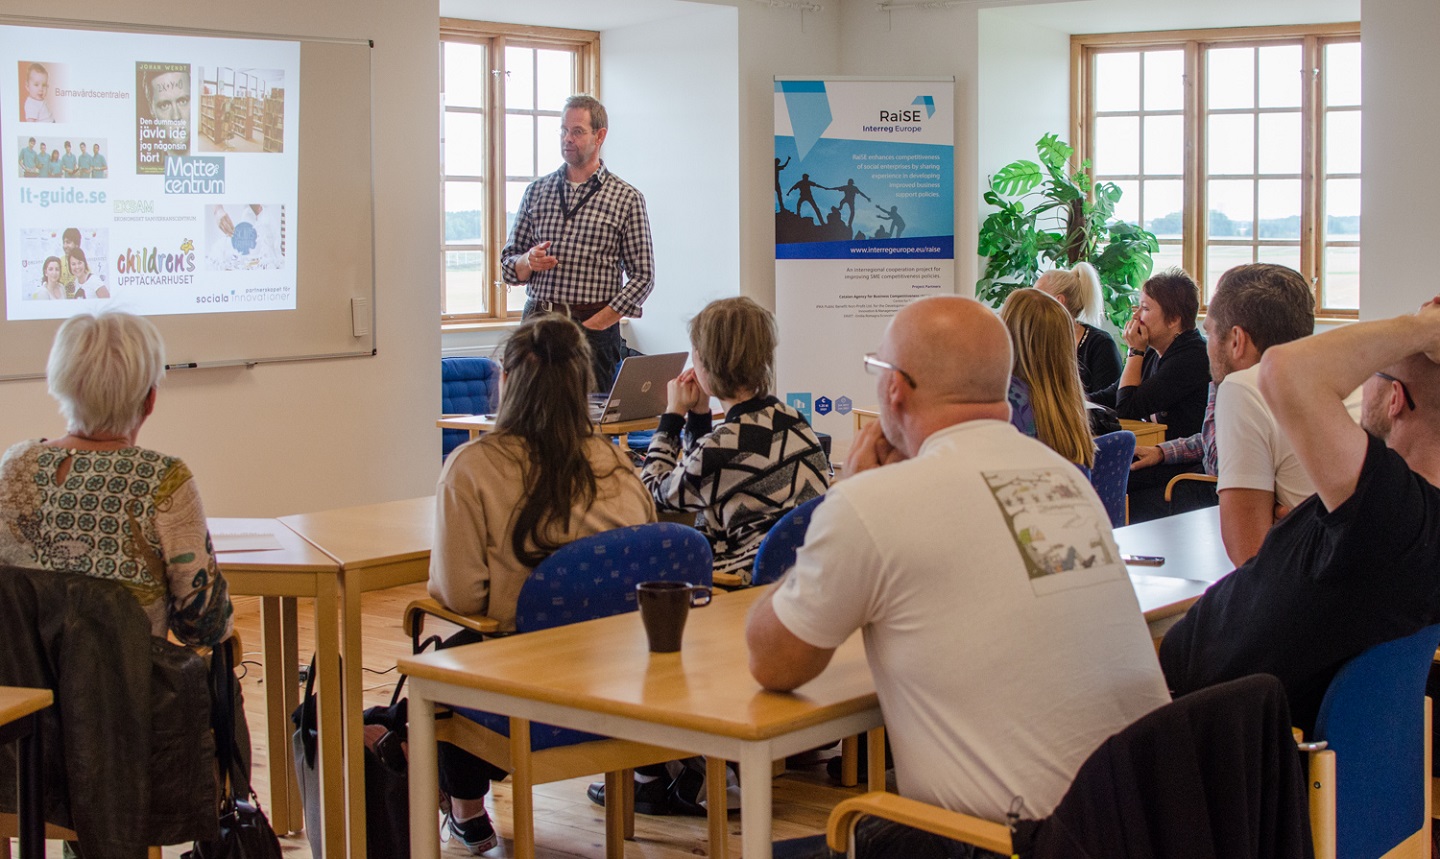 RaiSE presented in a Seminar on SE in Örebro